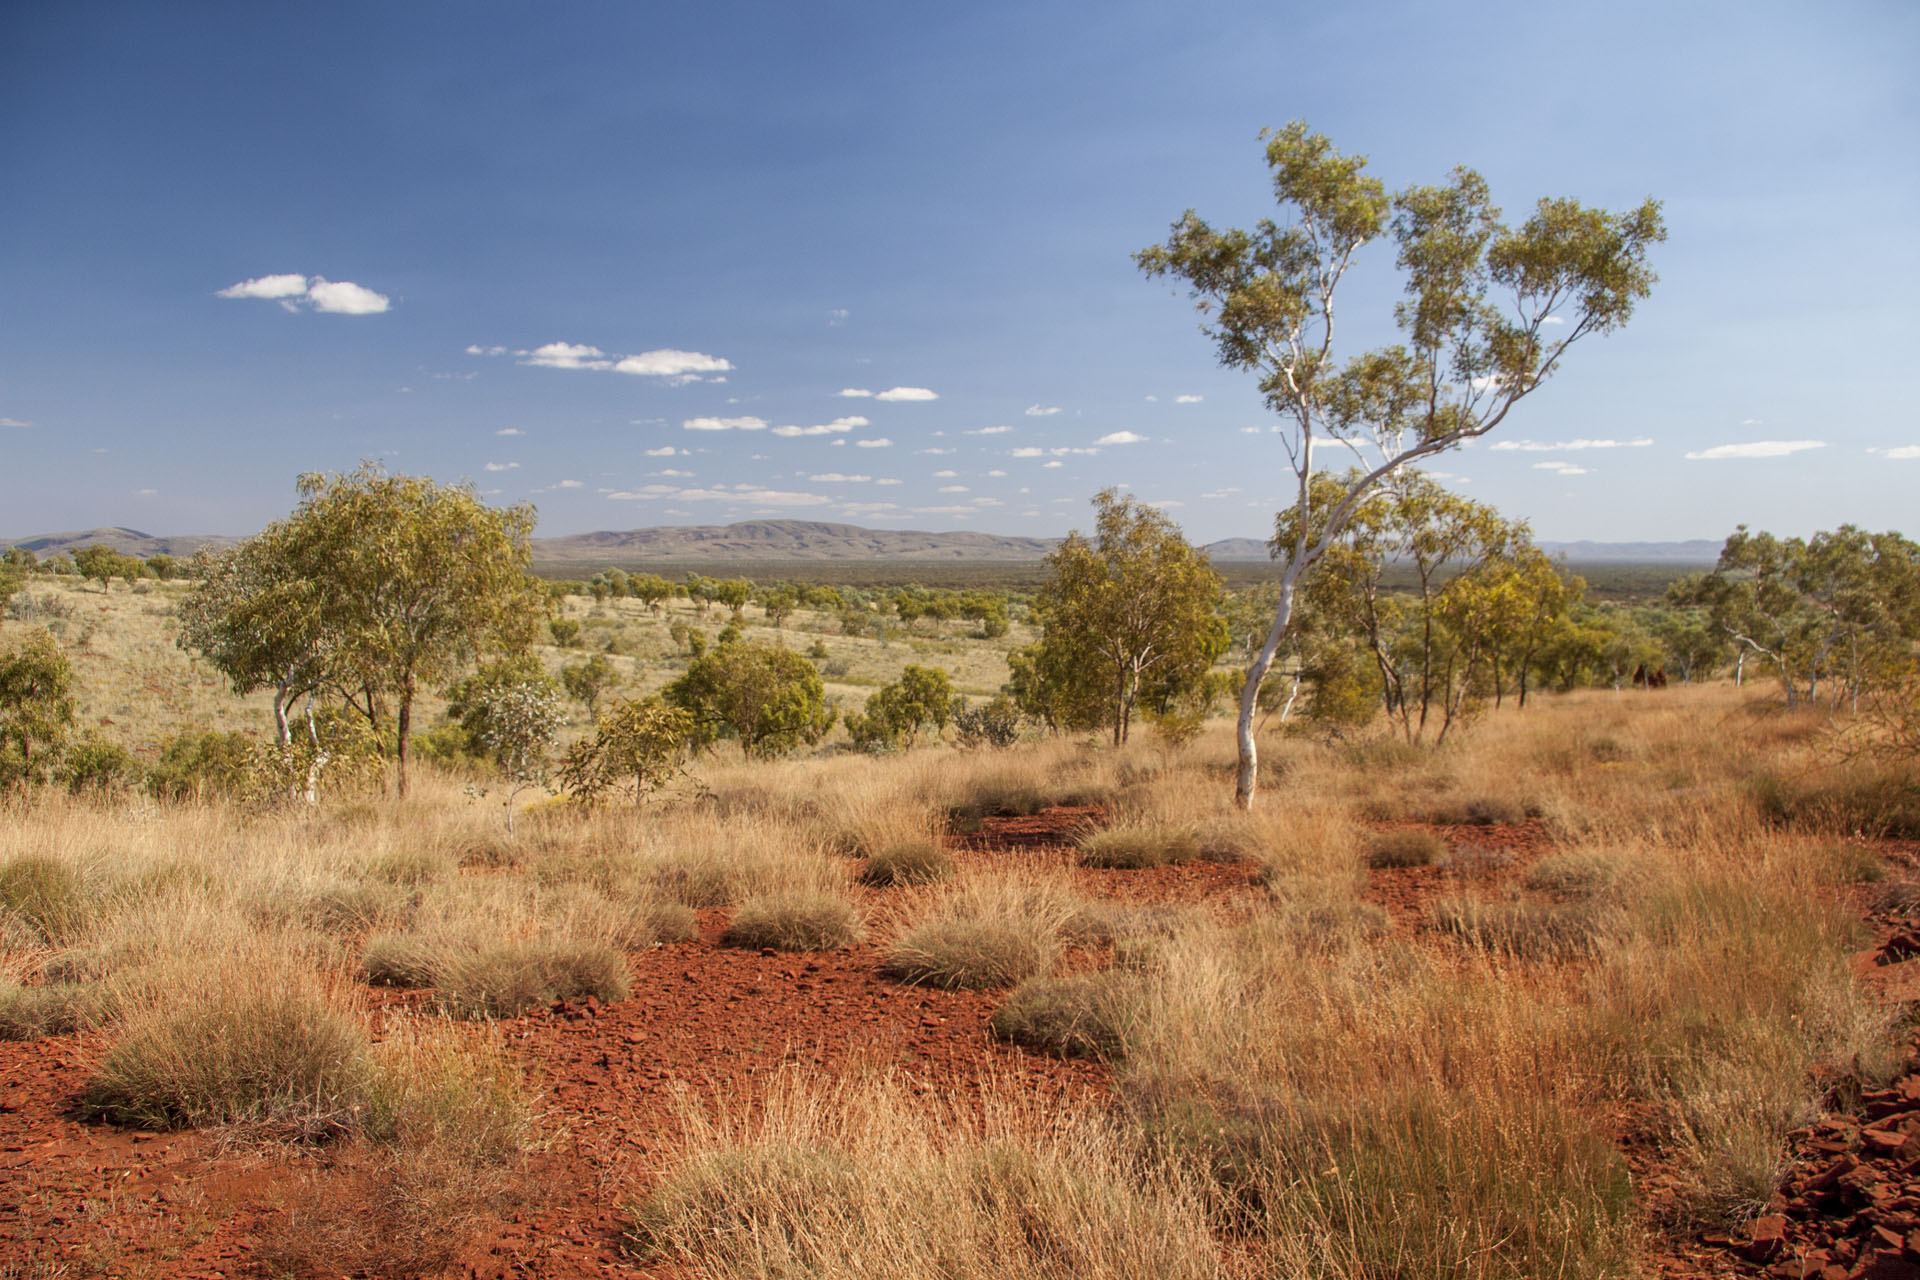 A typical Pilbara landscape.